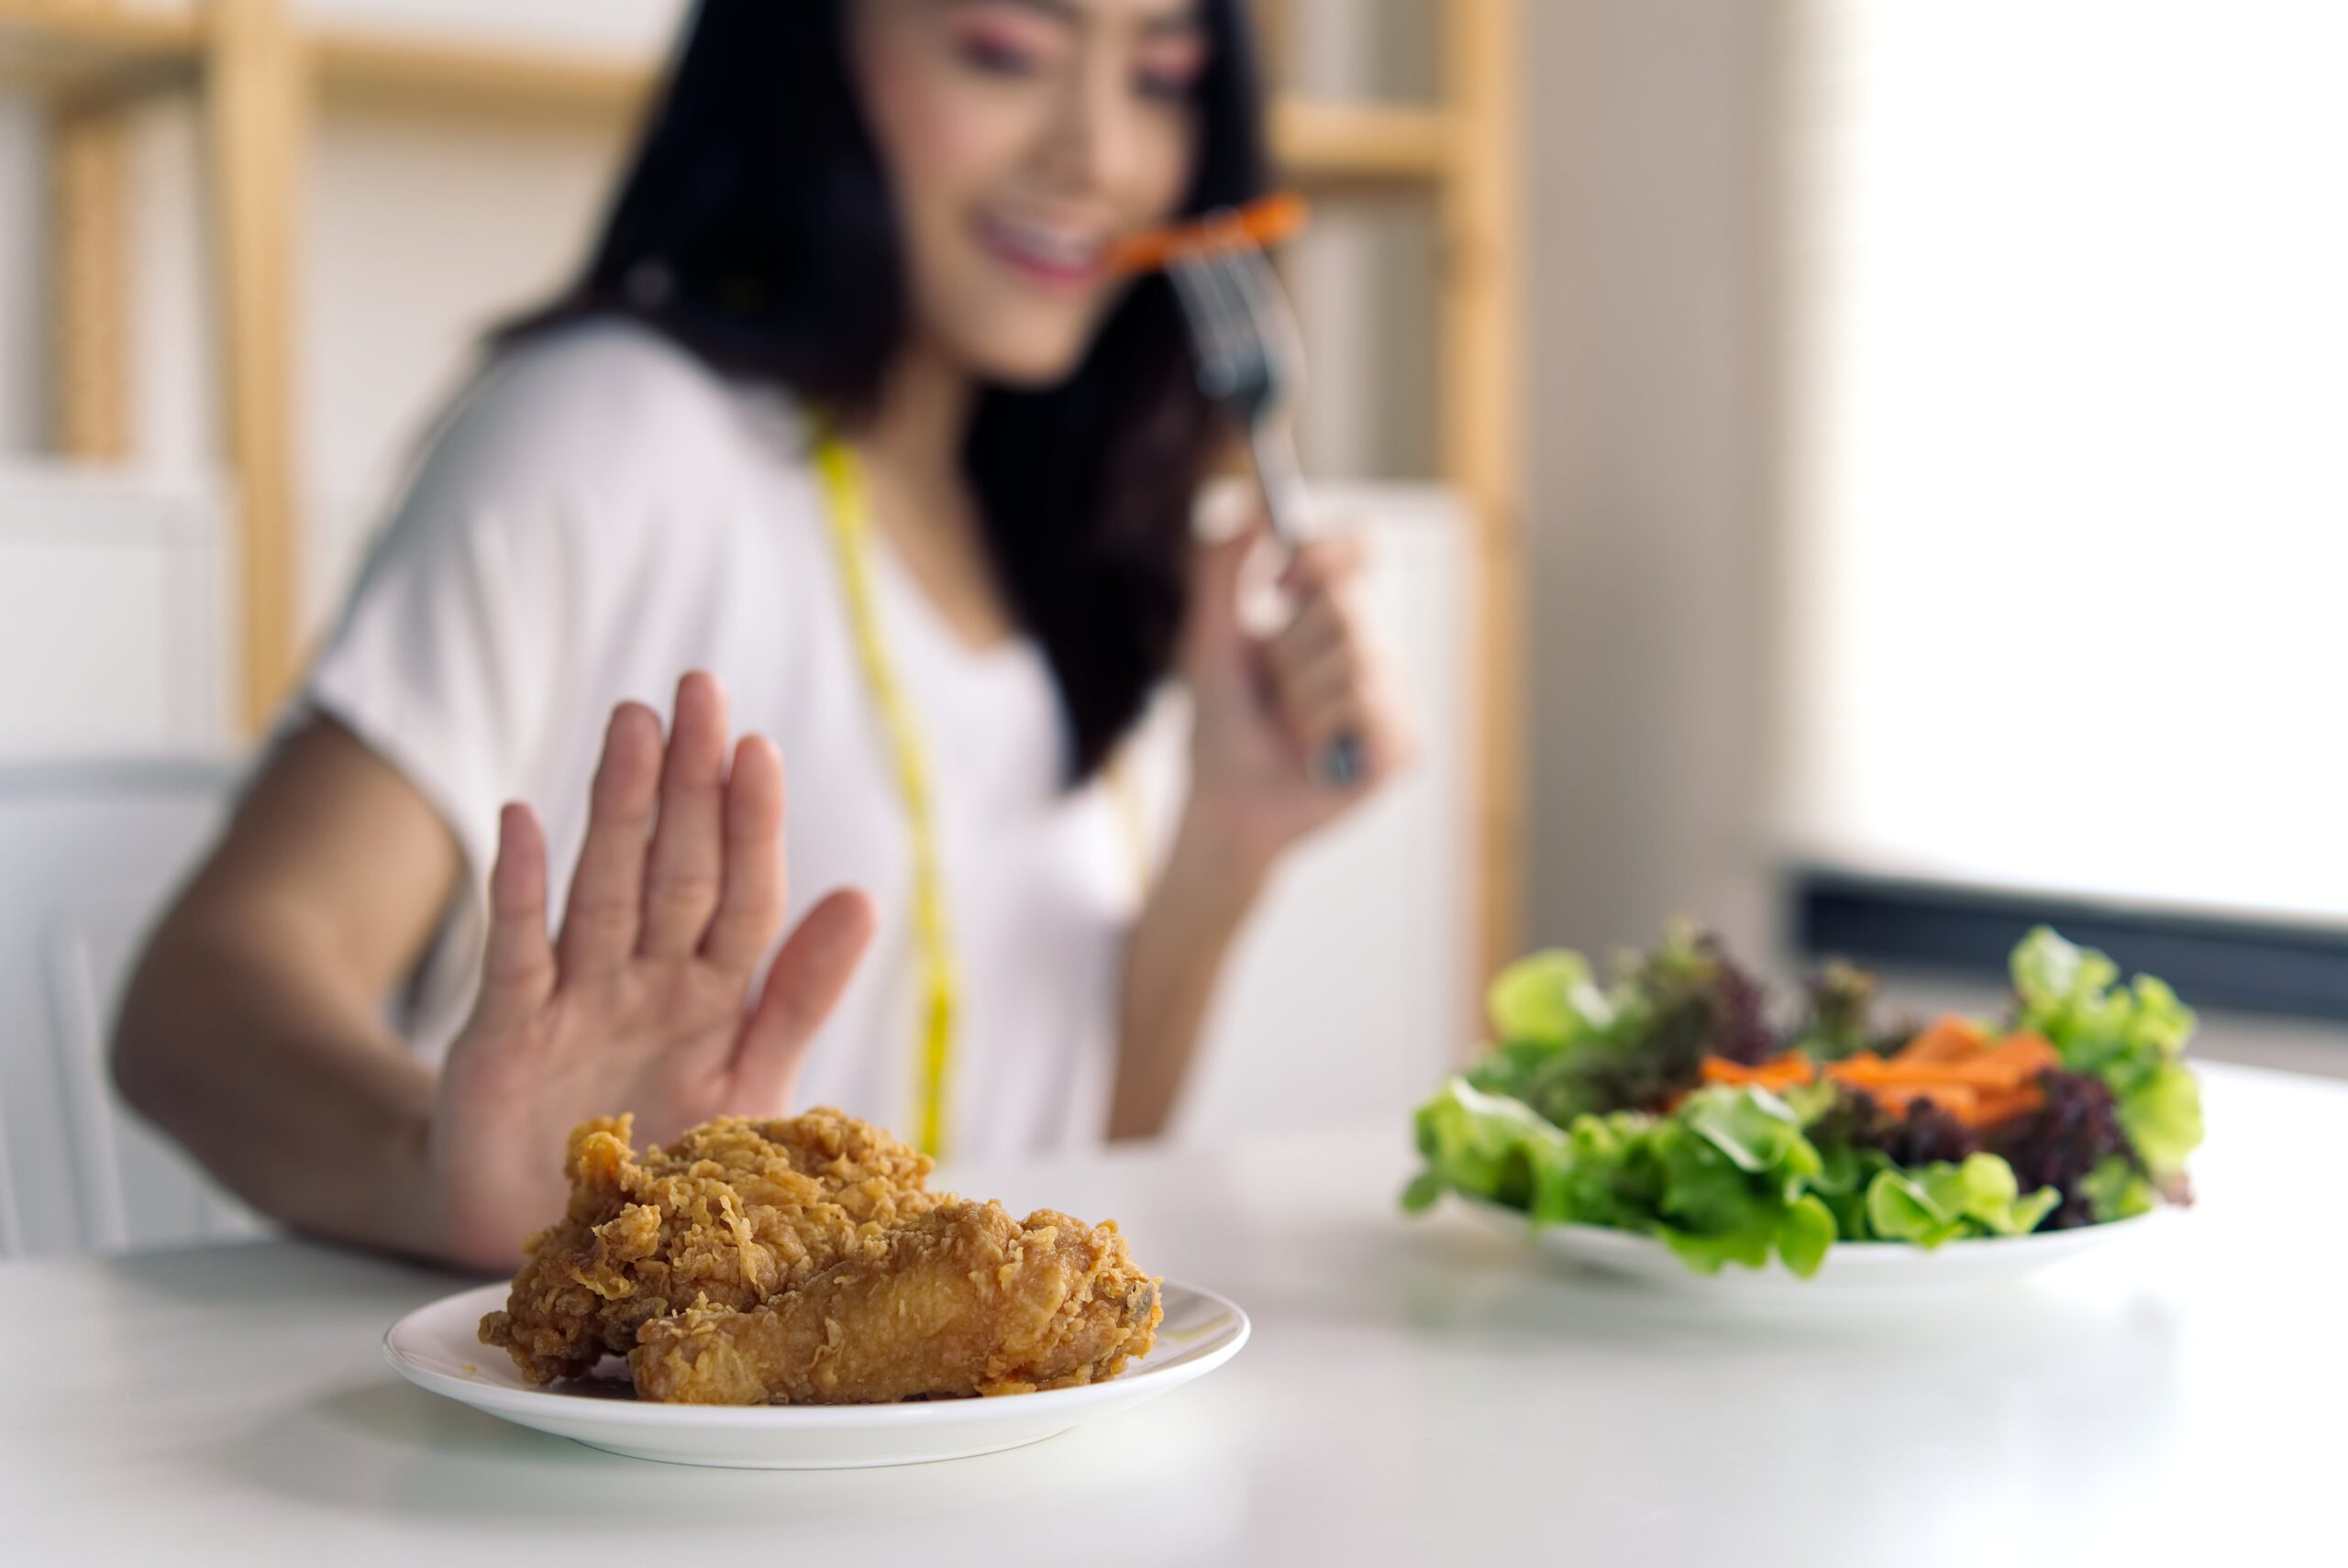 donna mangia insalata e rifiuta junk food